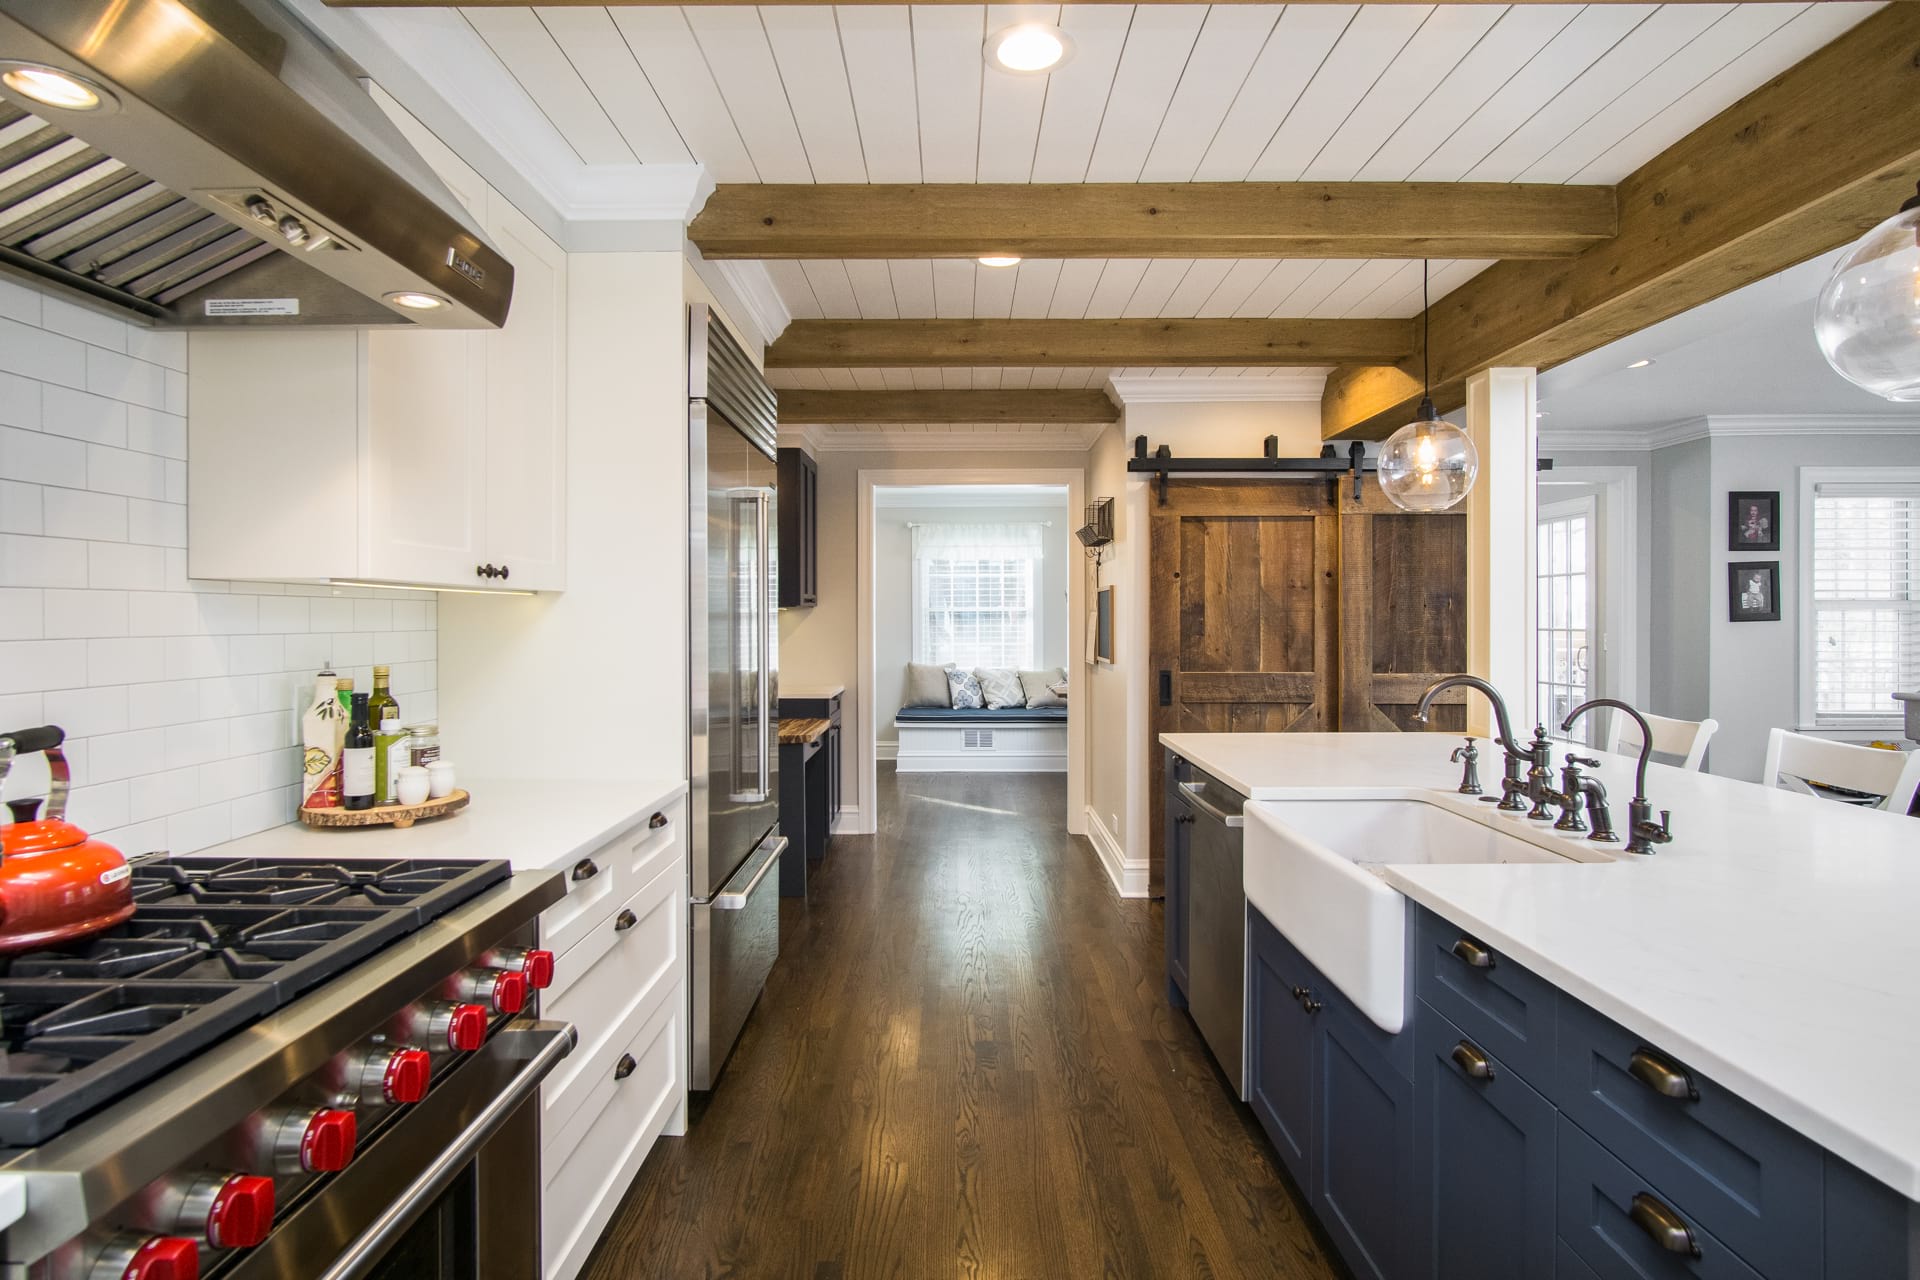 wooden floor kitchen with blue cupboards